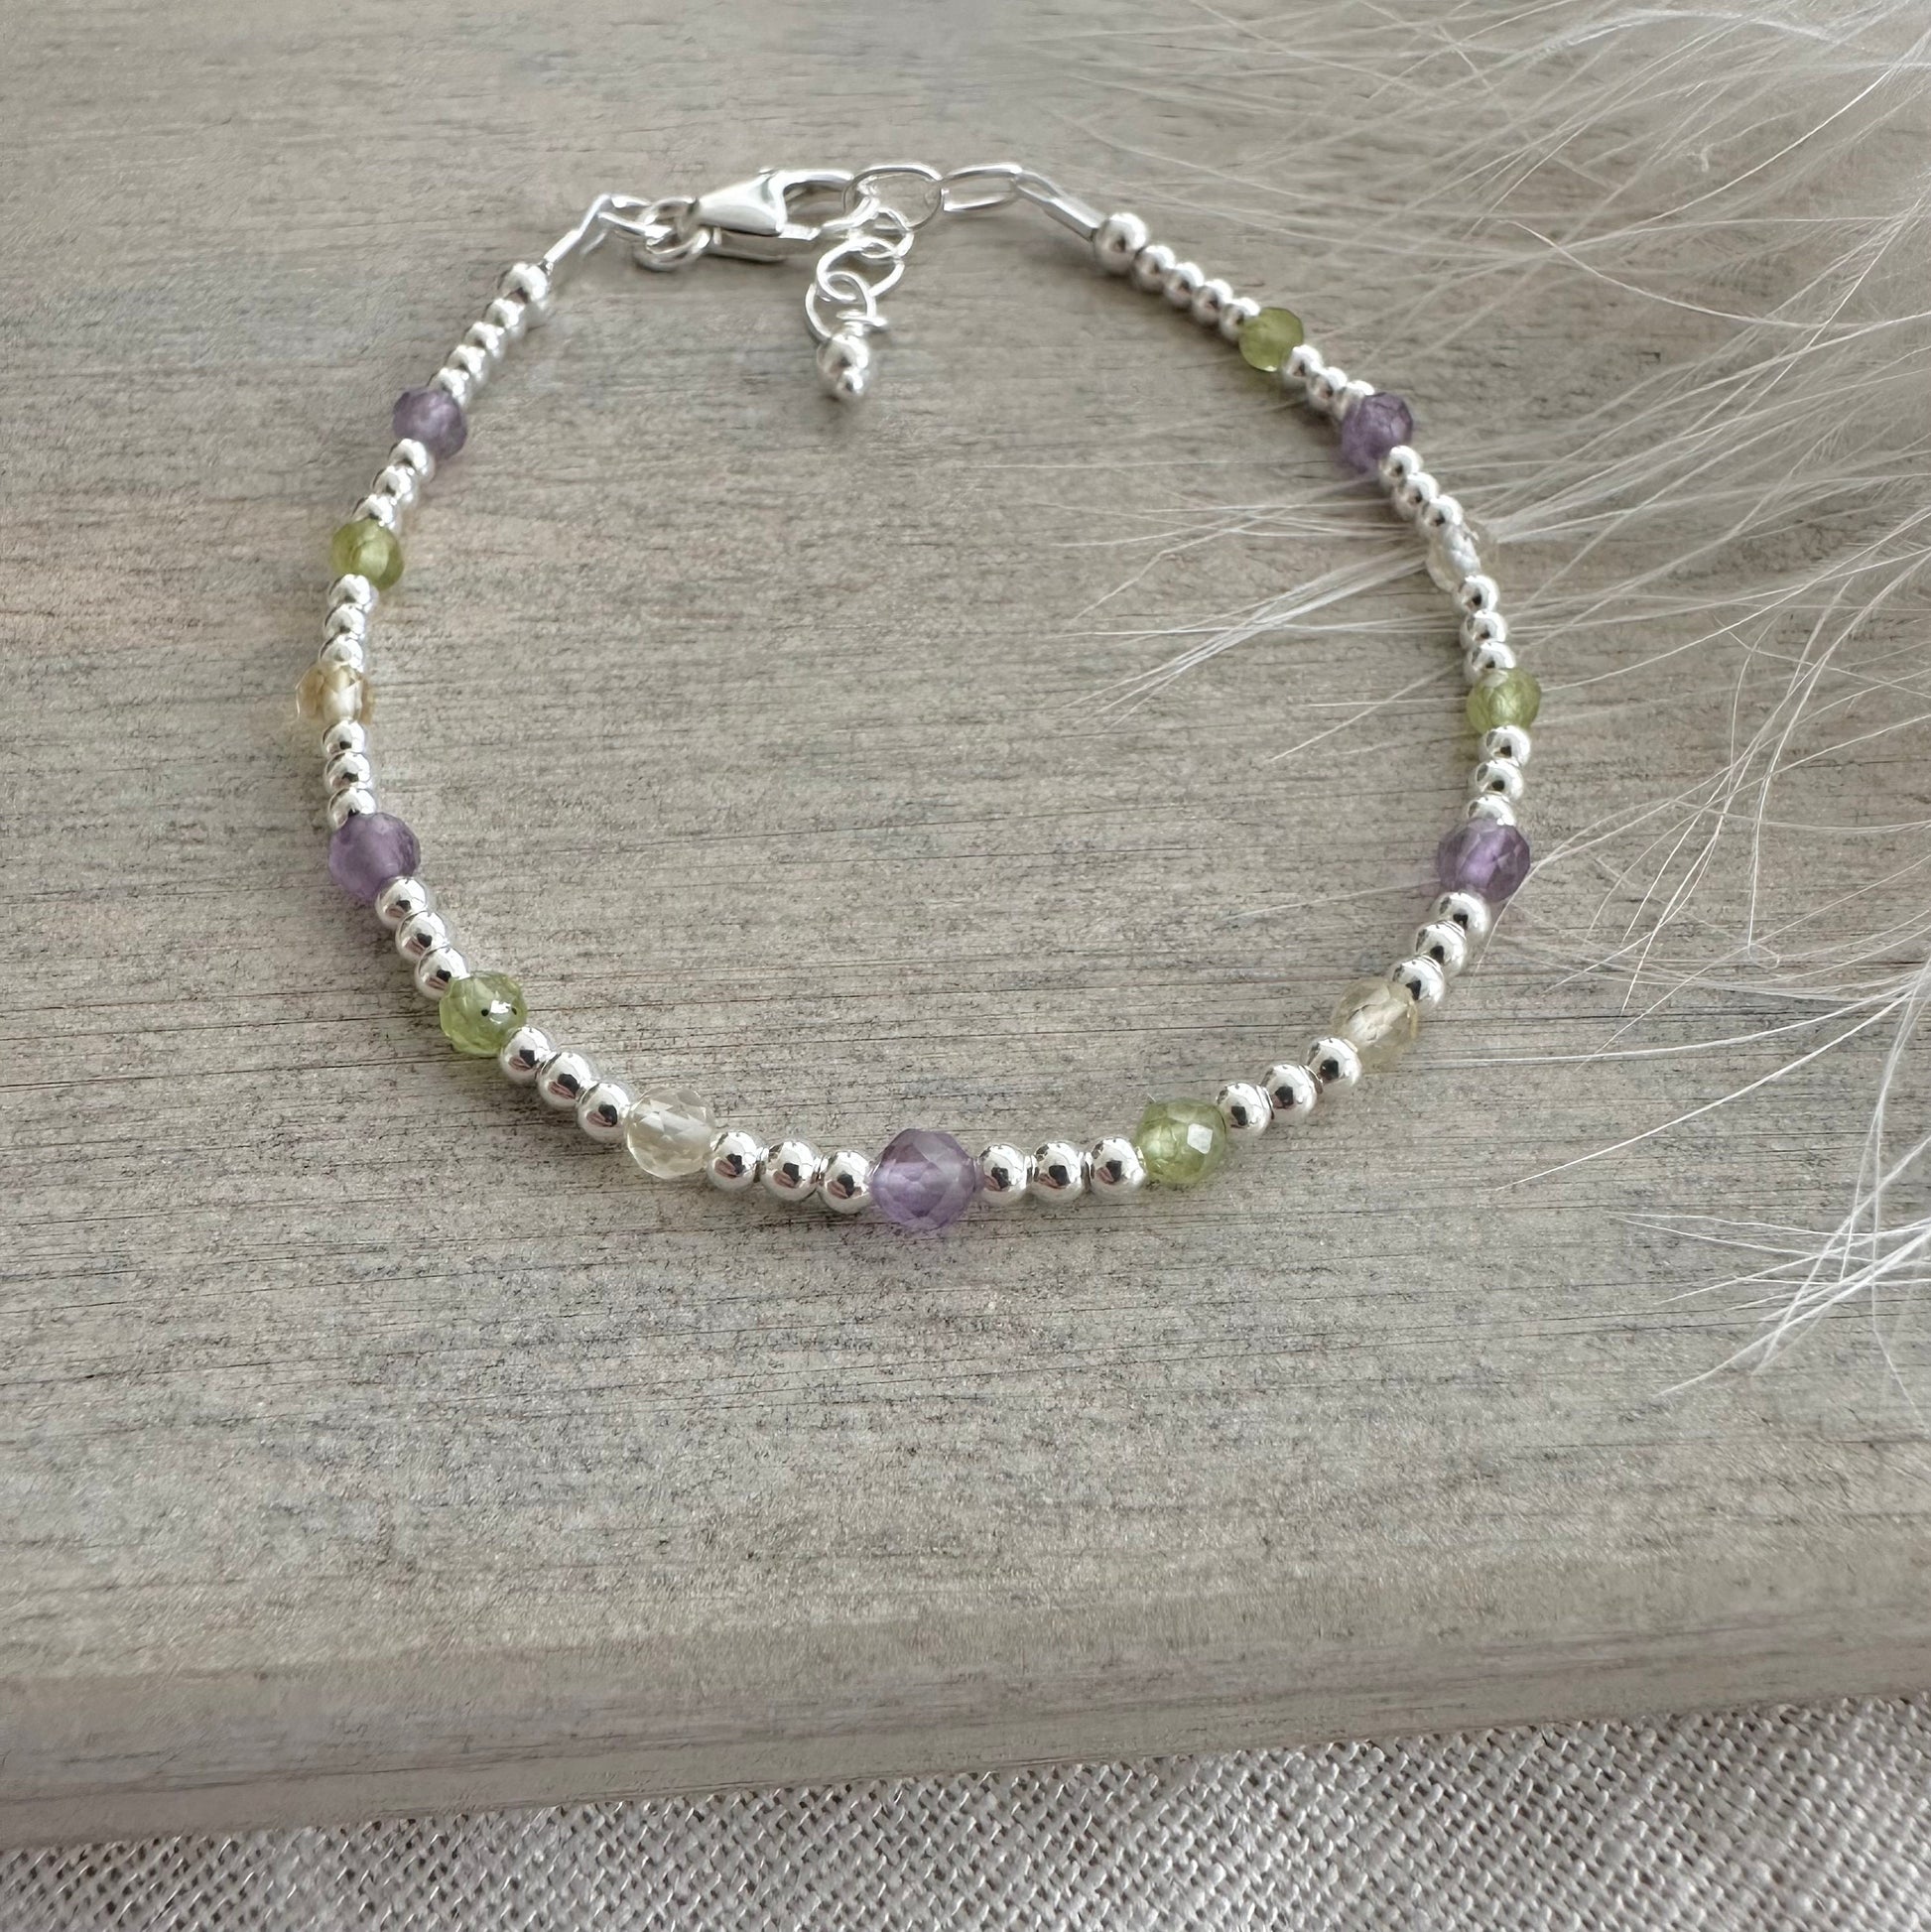 Delicate Bracelet for Summer with gemstones and Sterling Silver, colourful bracelet for summer holidays